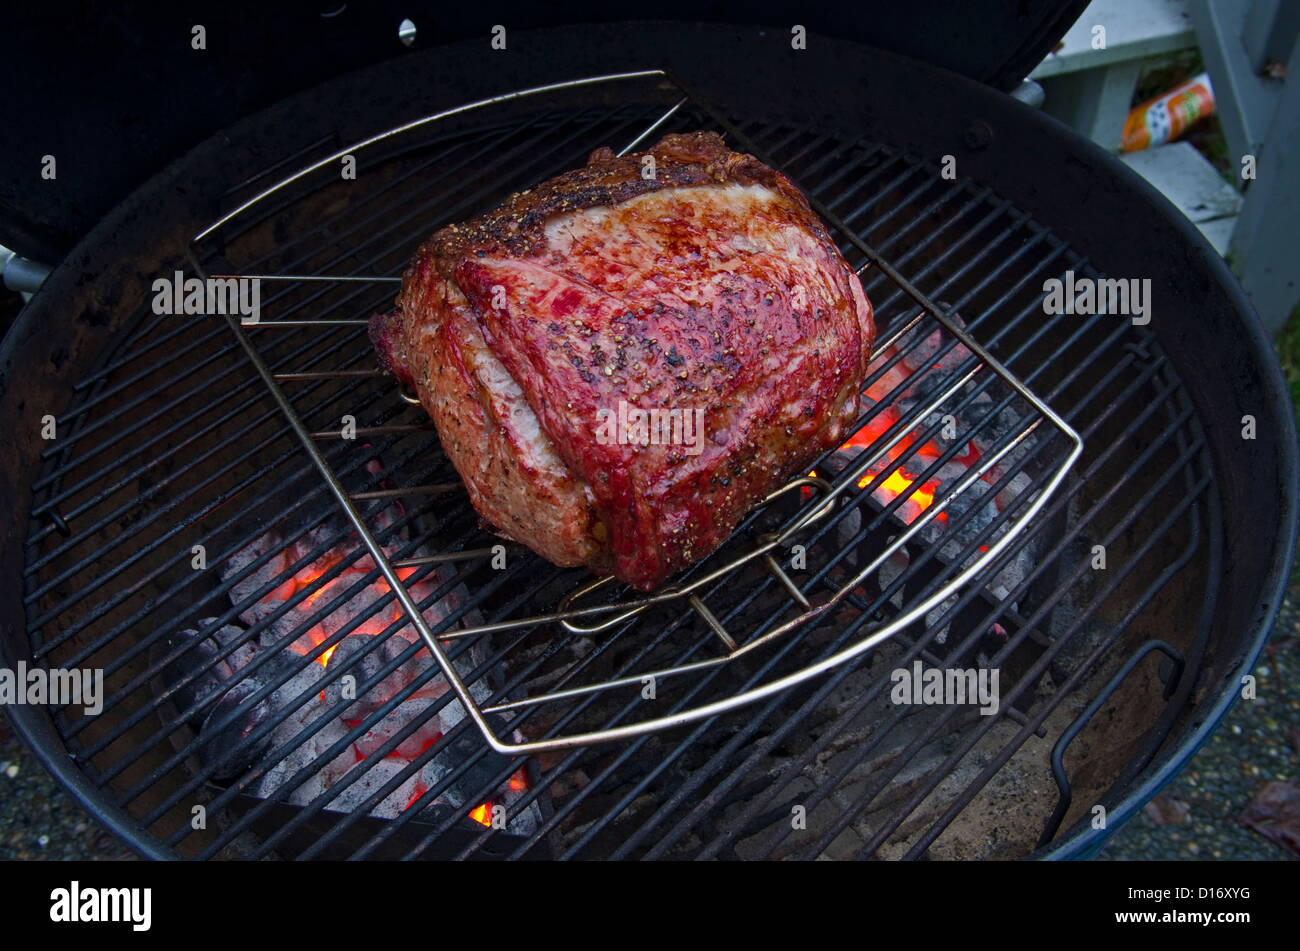 Prime Rib Roast onCharcoal Barbecue Stock Photo